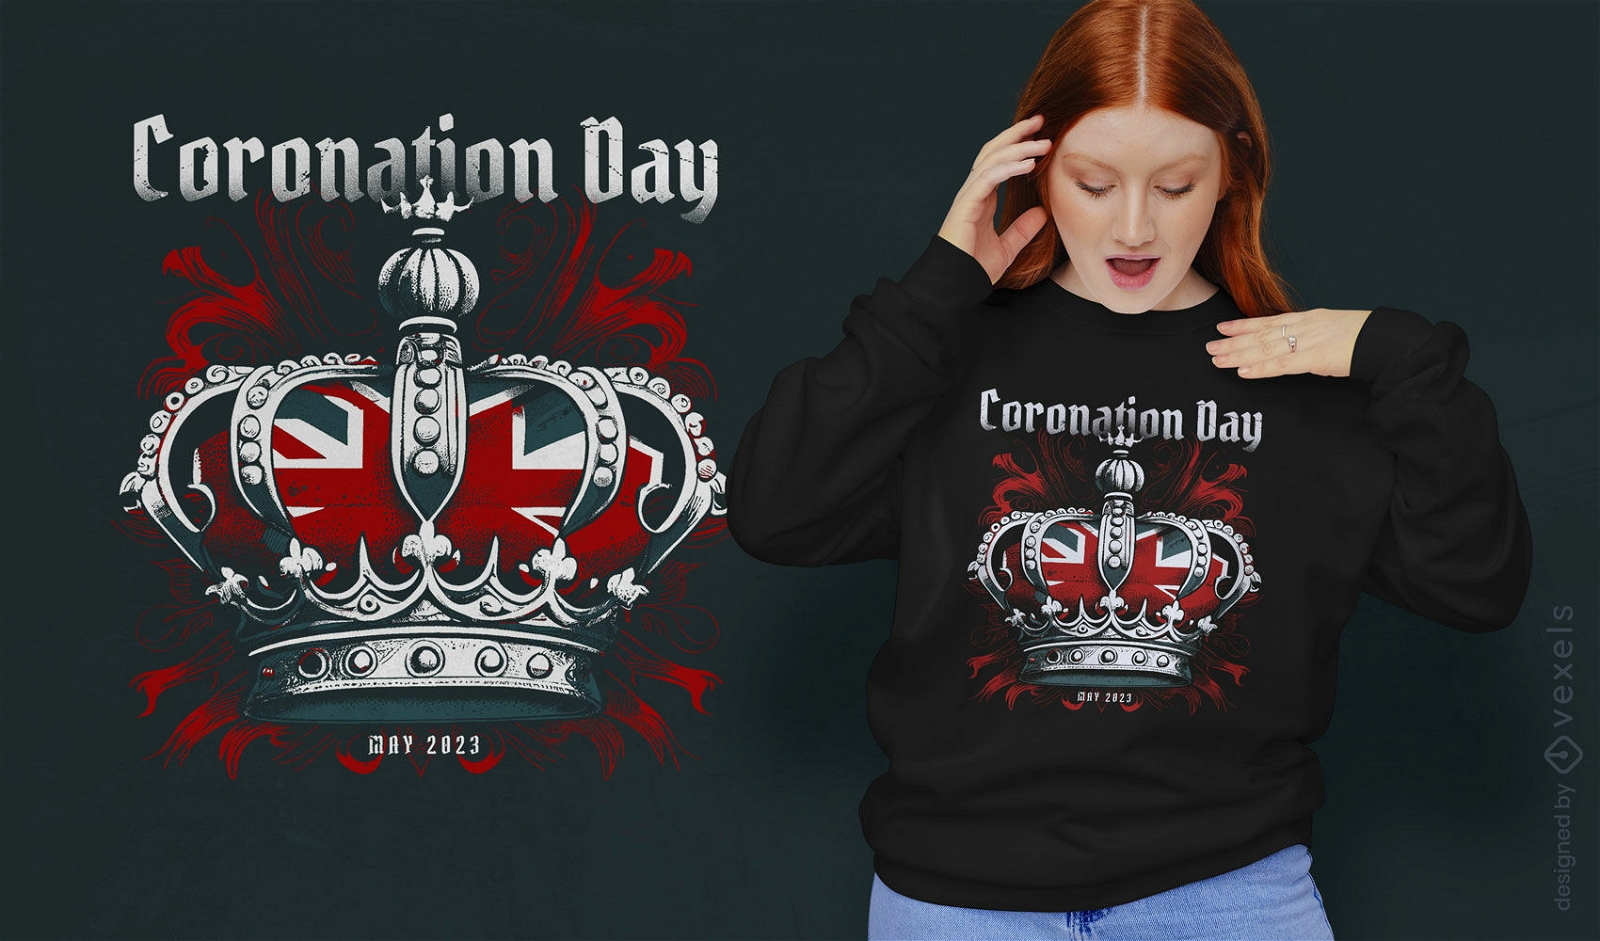 Coronation day t-shirt design